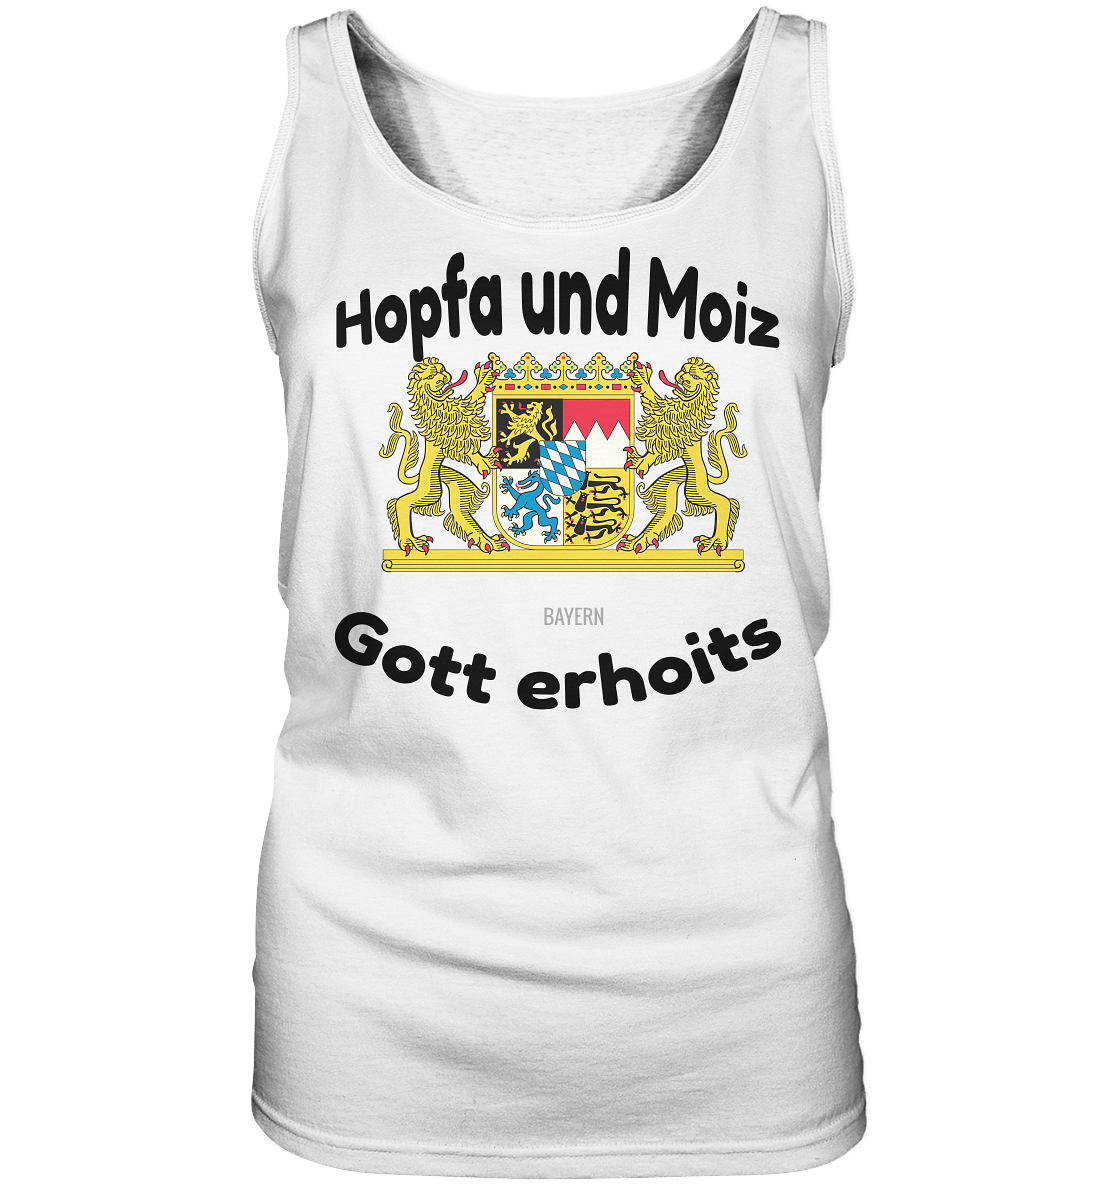 Hopfa and Moiz God erhoits - Ladies tank top